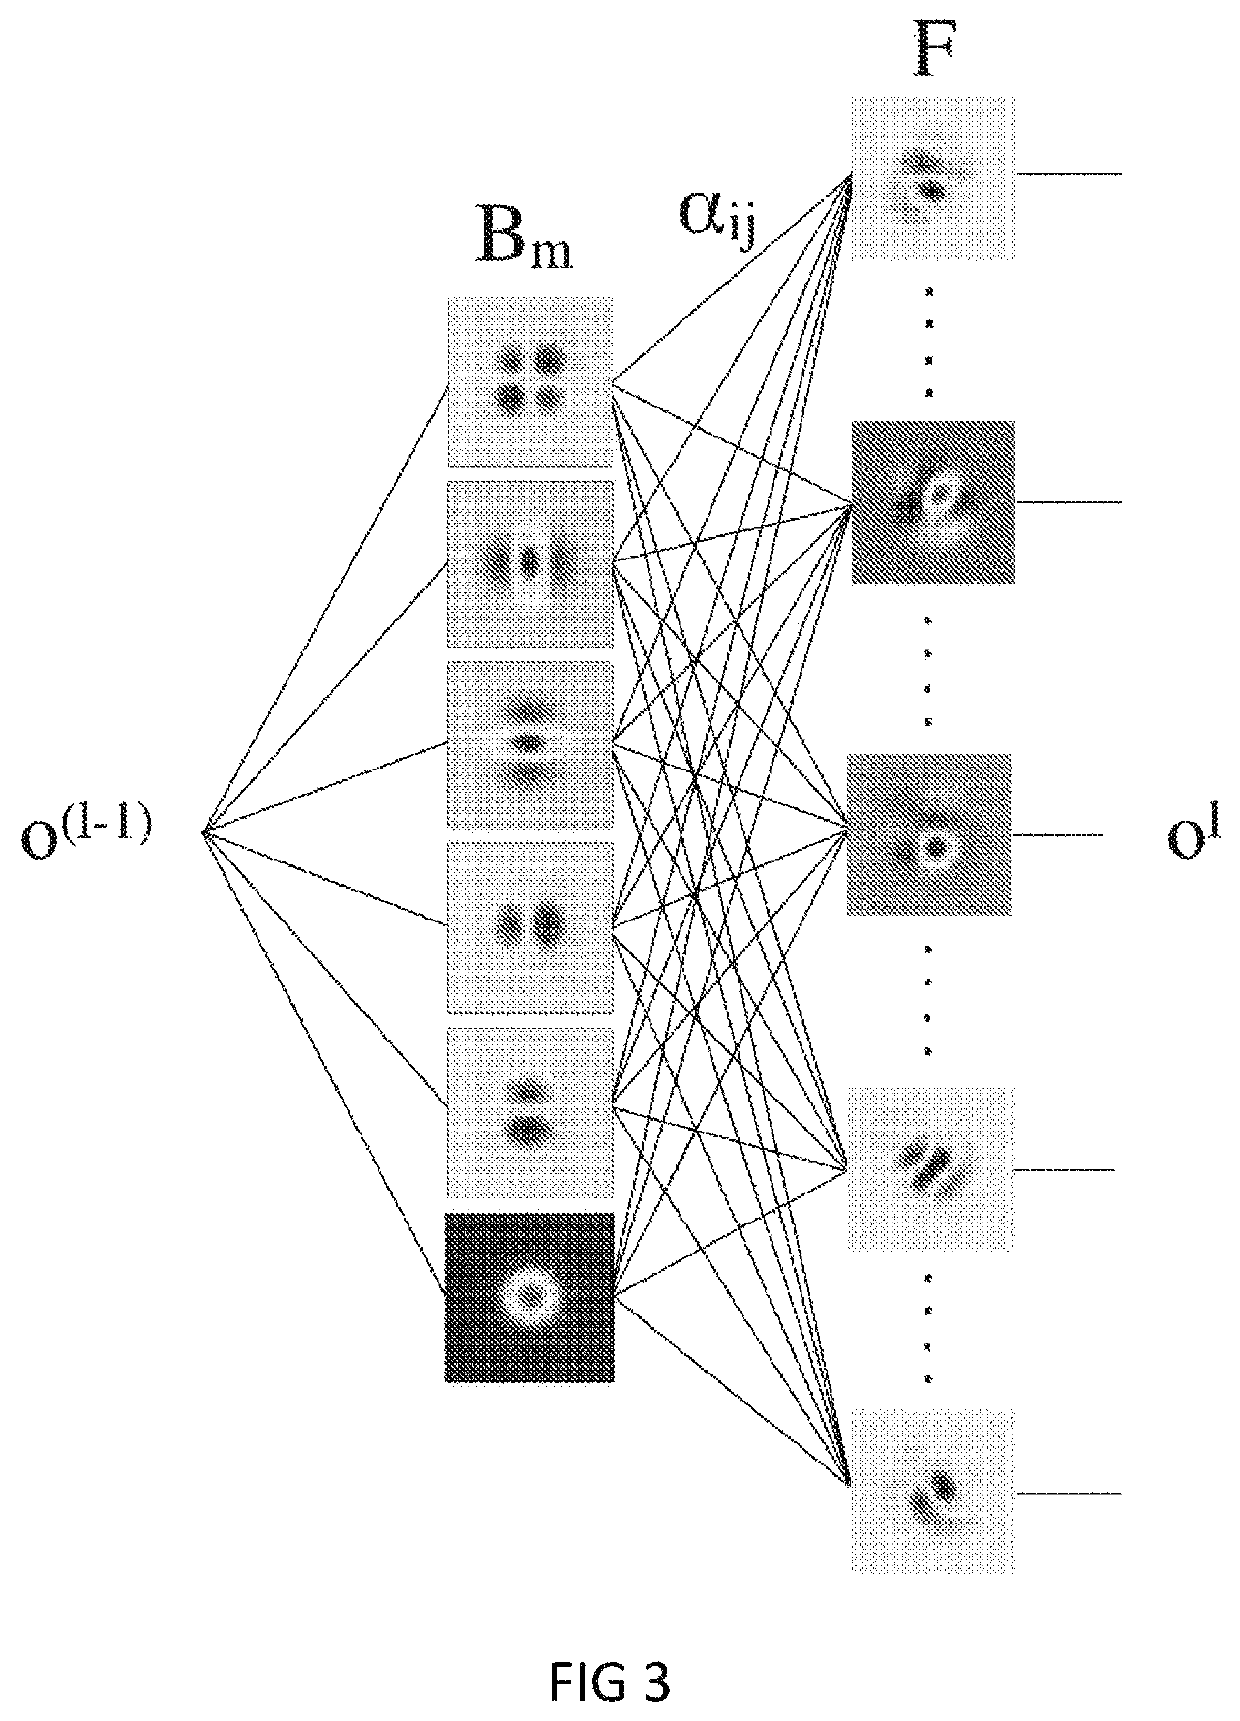 Deep receptive field networks